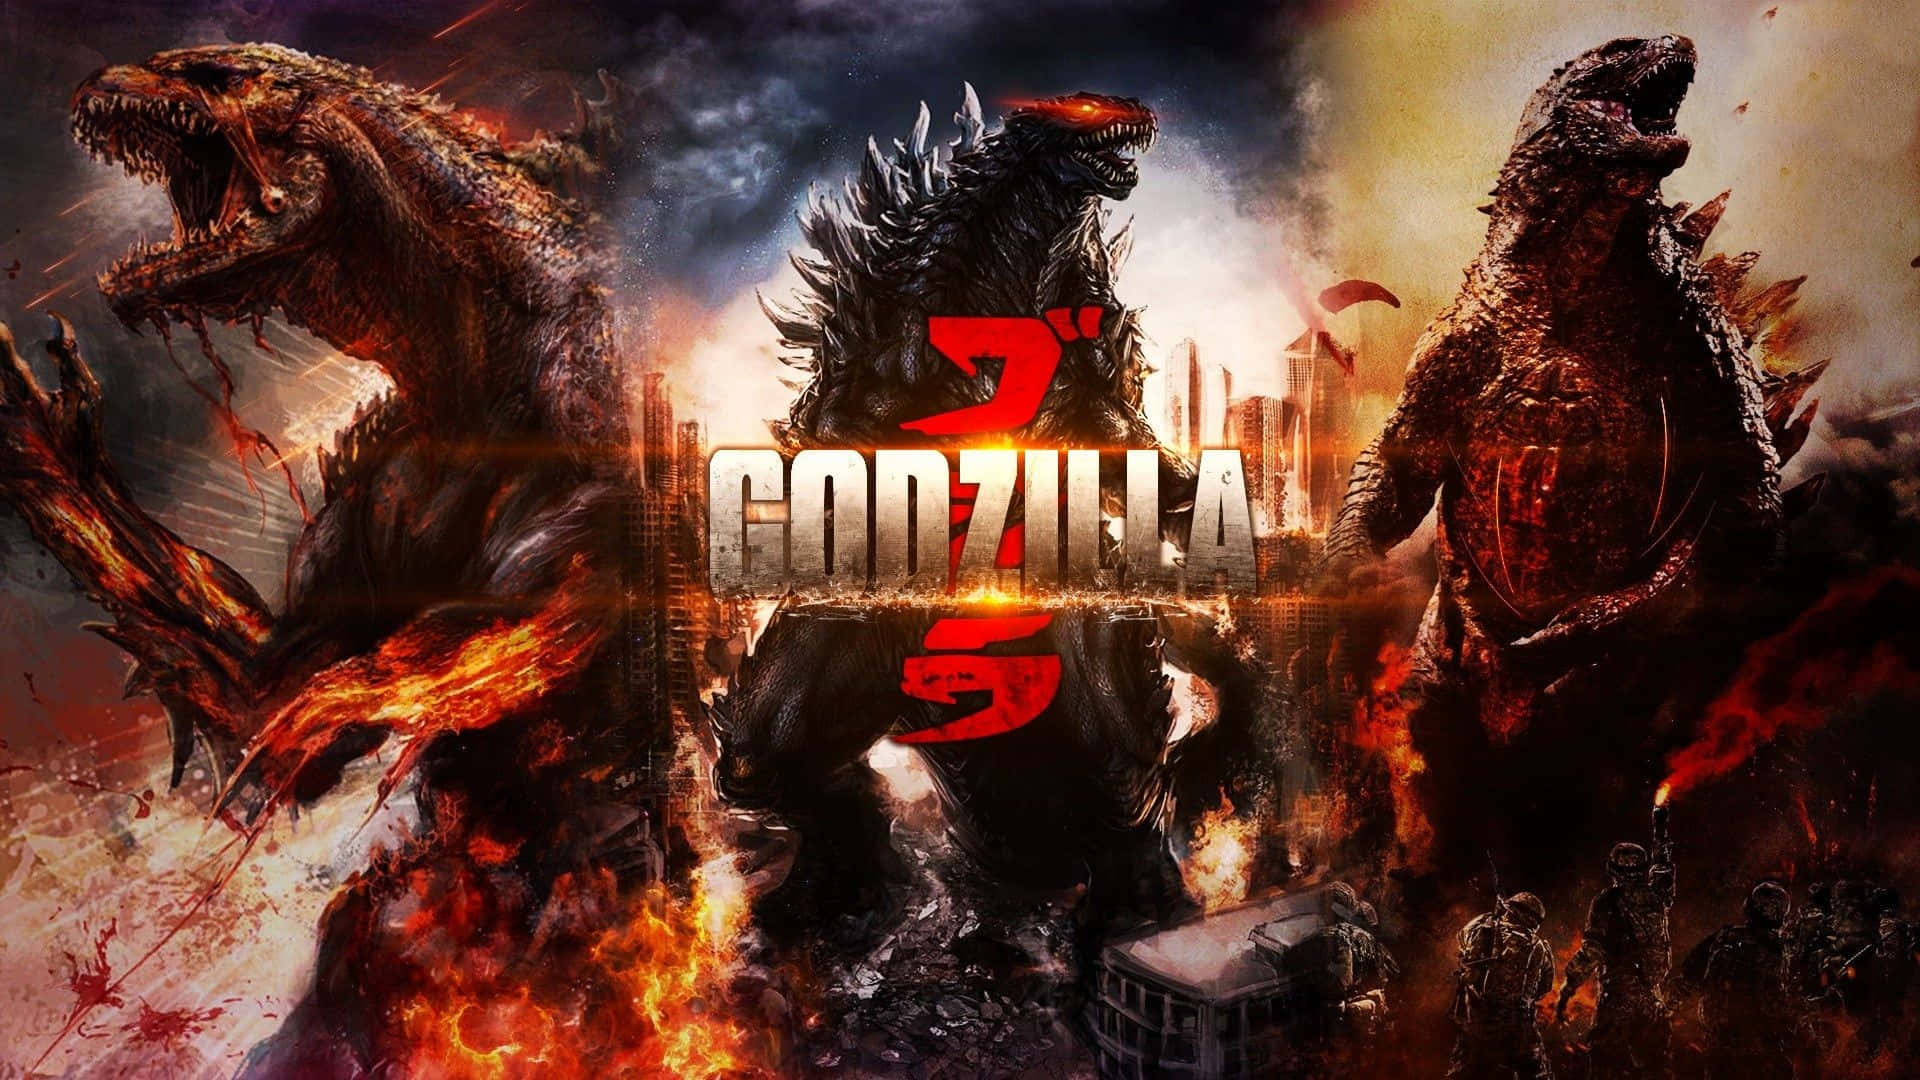 Cool Godzilla Poster Wallpaper